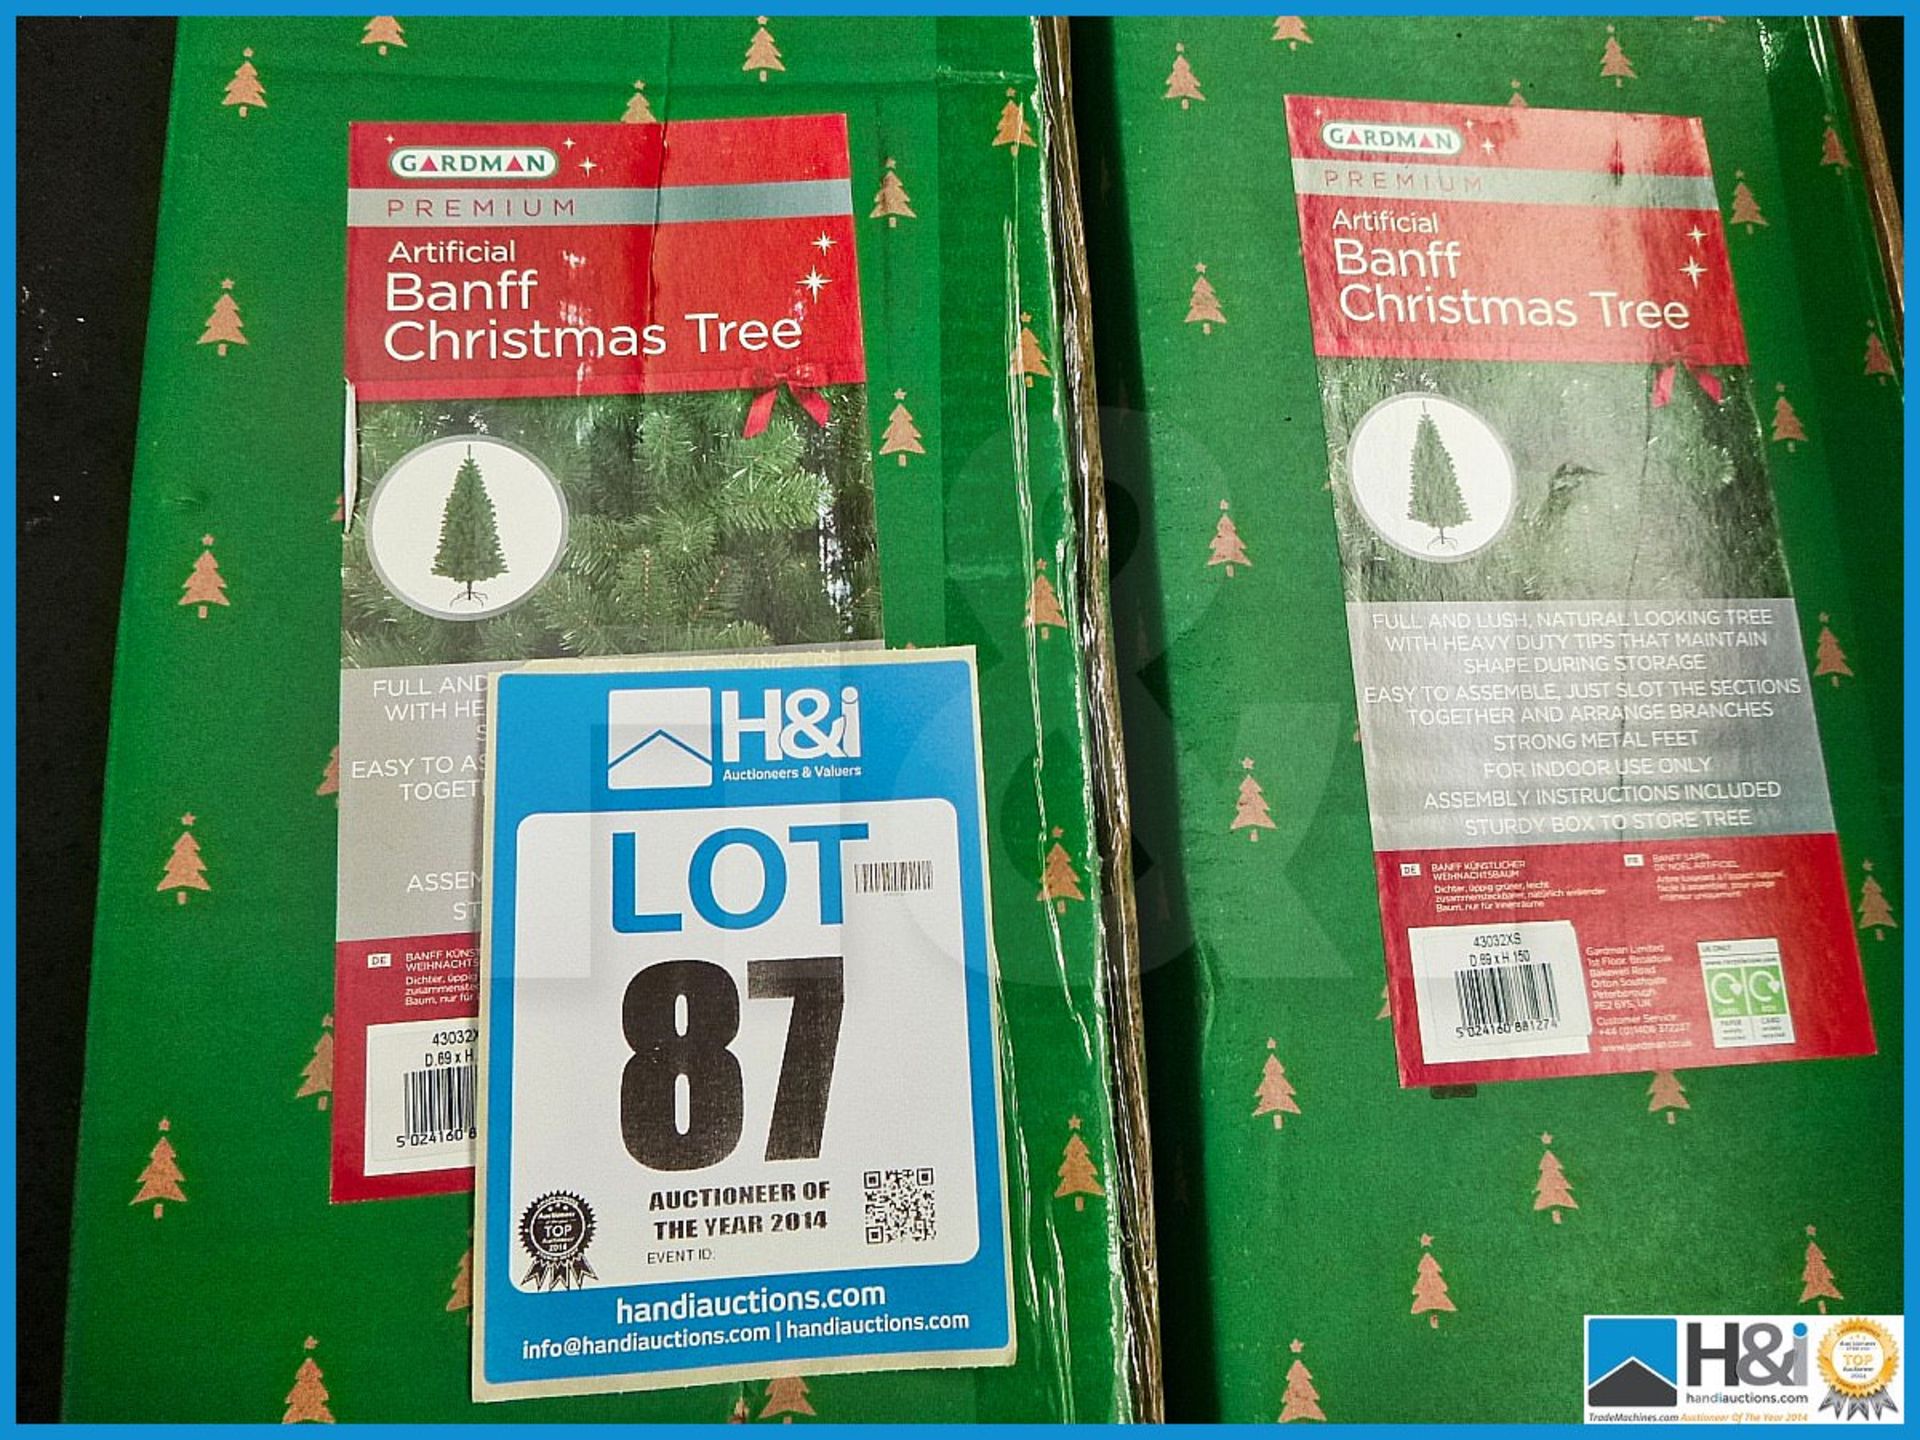 GARDMAN ARTIFICIAL 5' BANFF CHRISTMAS TREE , 43032XS, RRP £49.99, FULL AND LUSH NATURAL LOOKING TREE